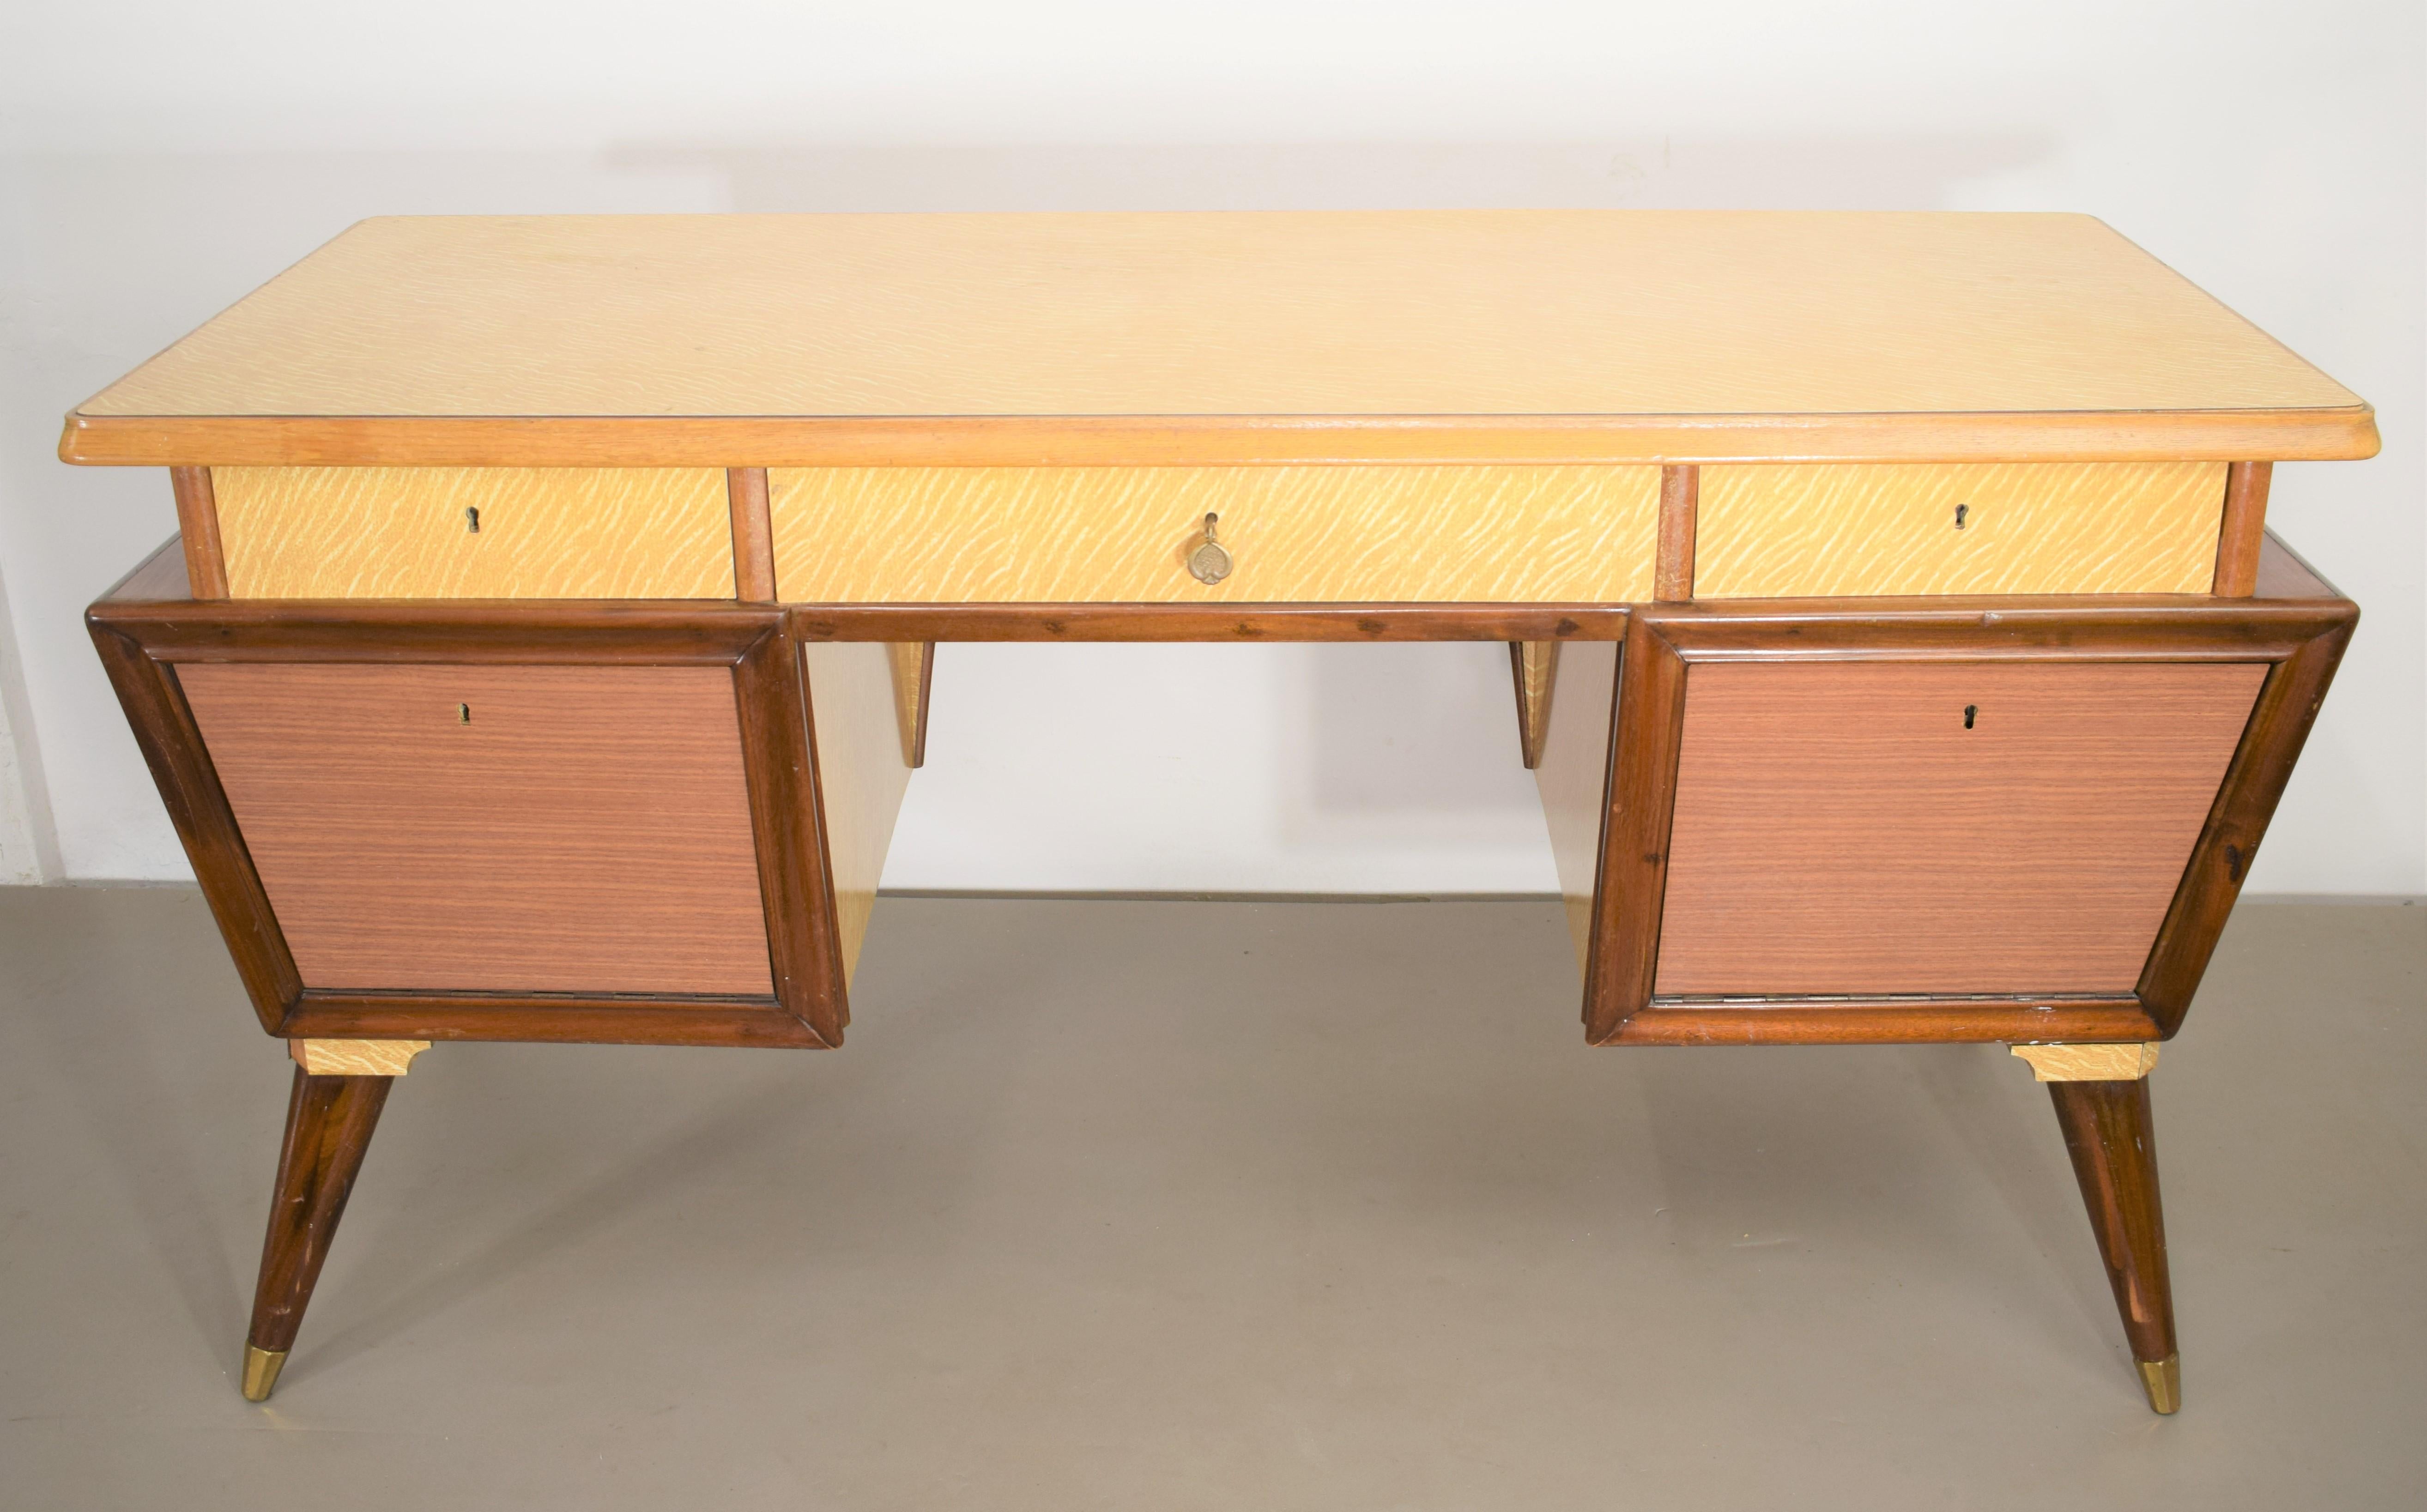 Italian desk, 1950s.

Dimensions: H= 80 cm; W= 153 cm; D= 66 cm.